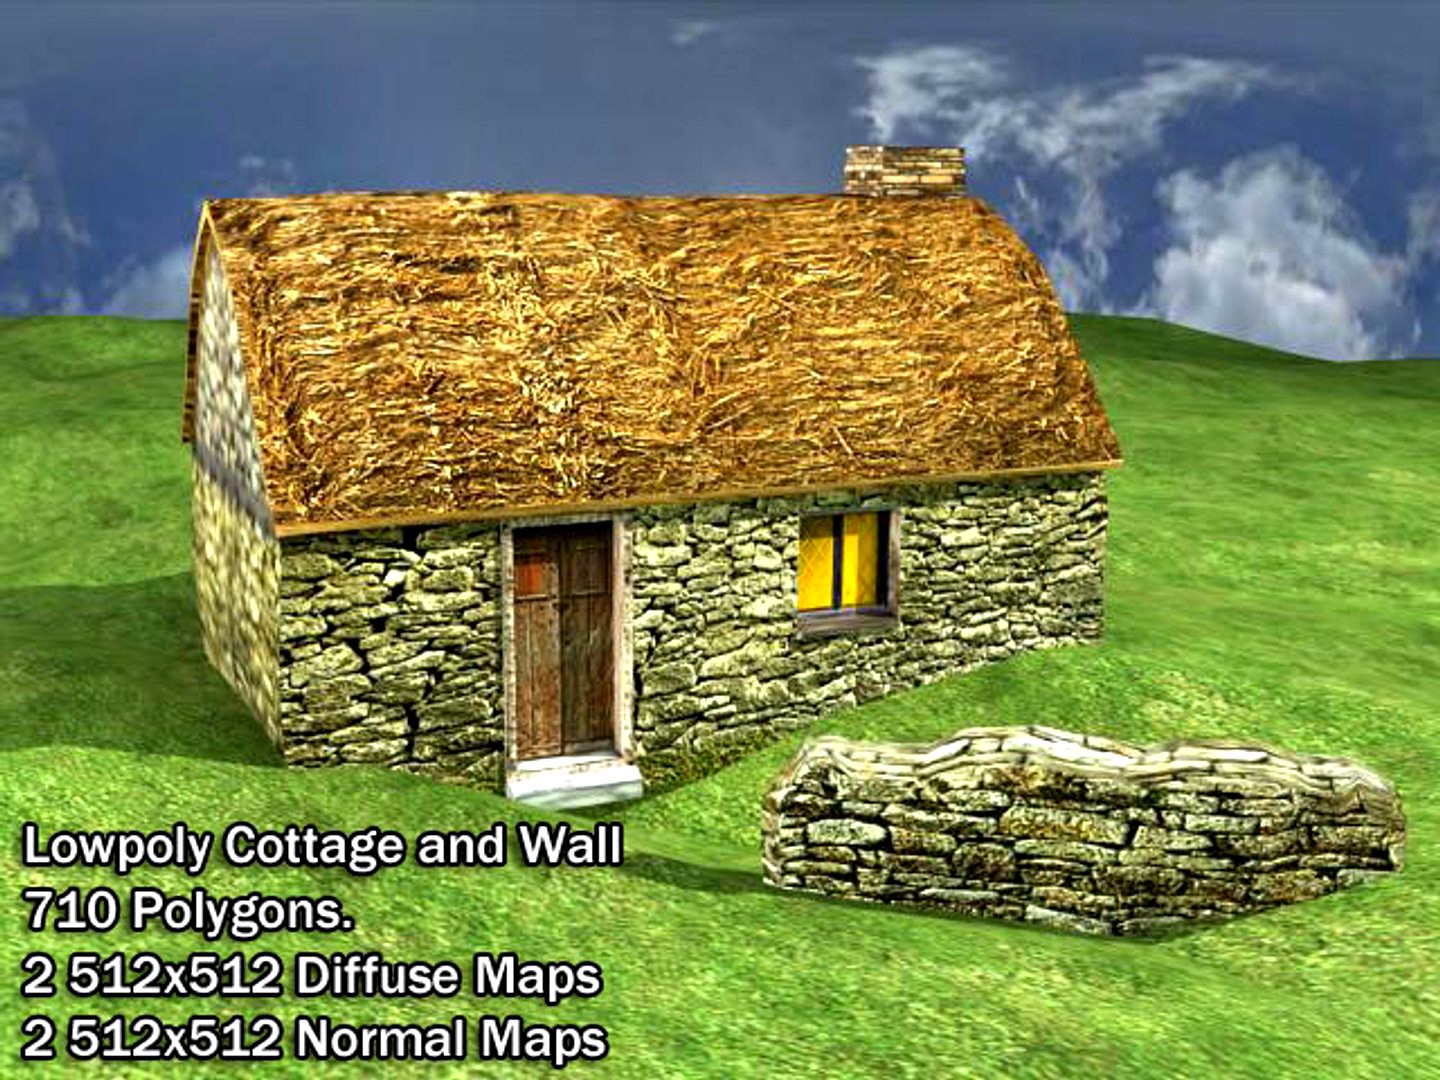 Irish/Medieval cottage